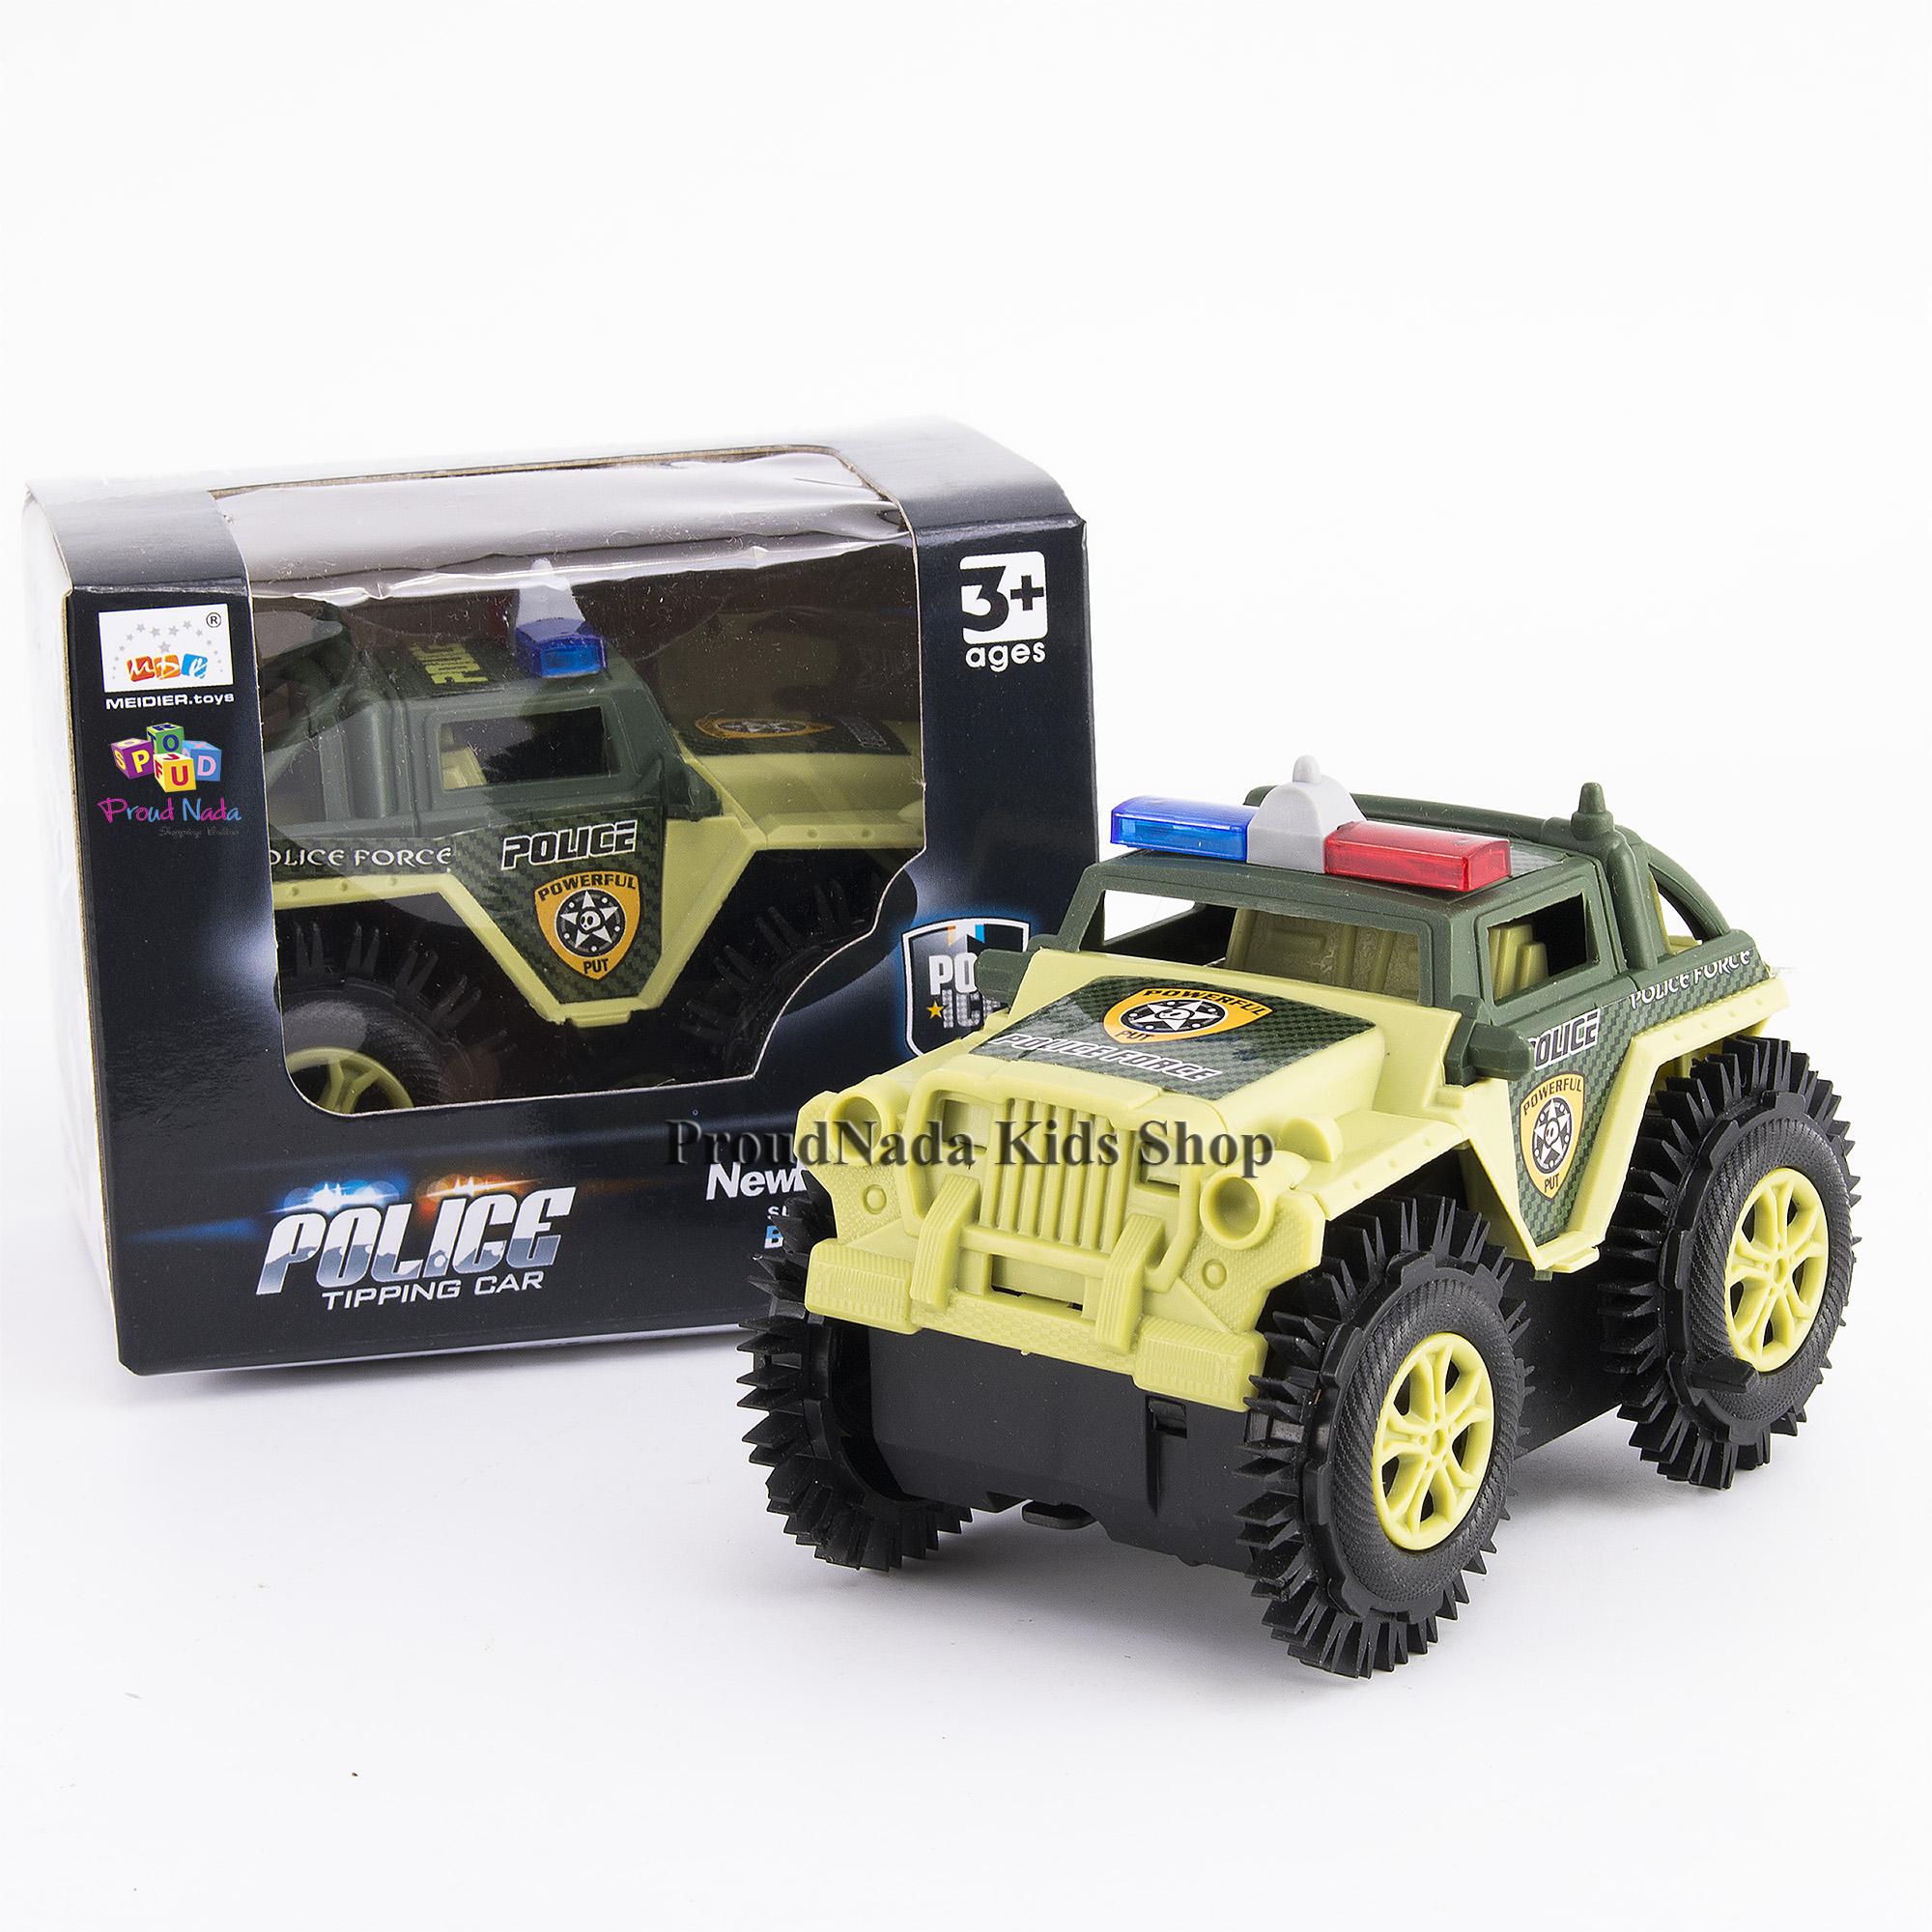 ProudNada Toys ของเล่นเด็กรถตำรวจตีลังกา MEIDIER.toys POLICE TIPPING CAR NP.M11-2 สี สีเขียว สี สีเขียว